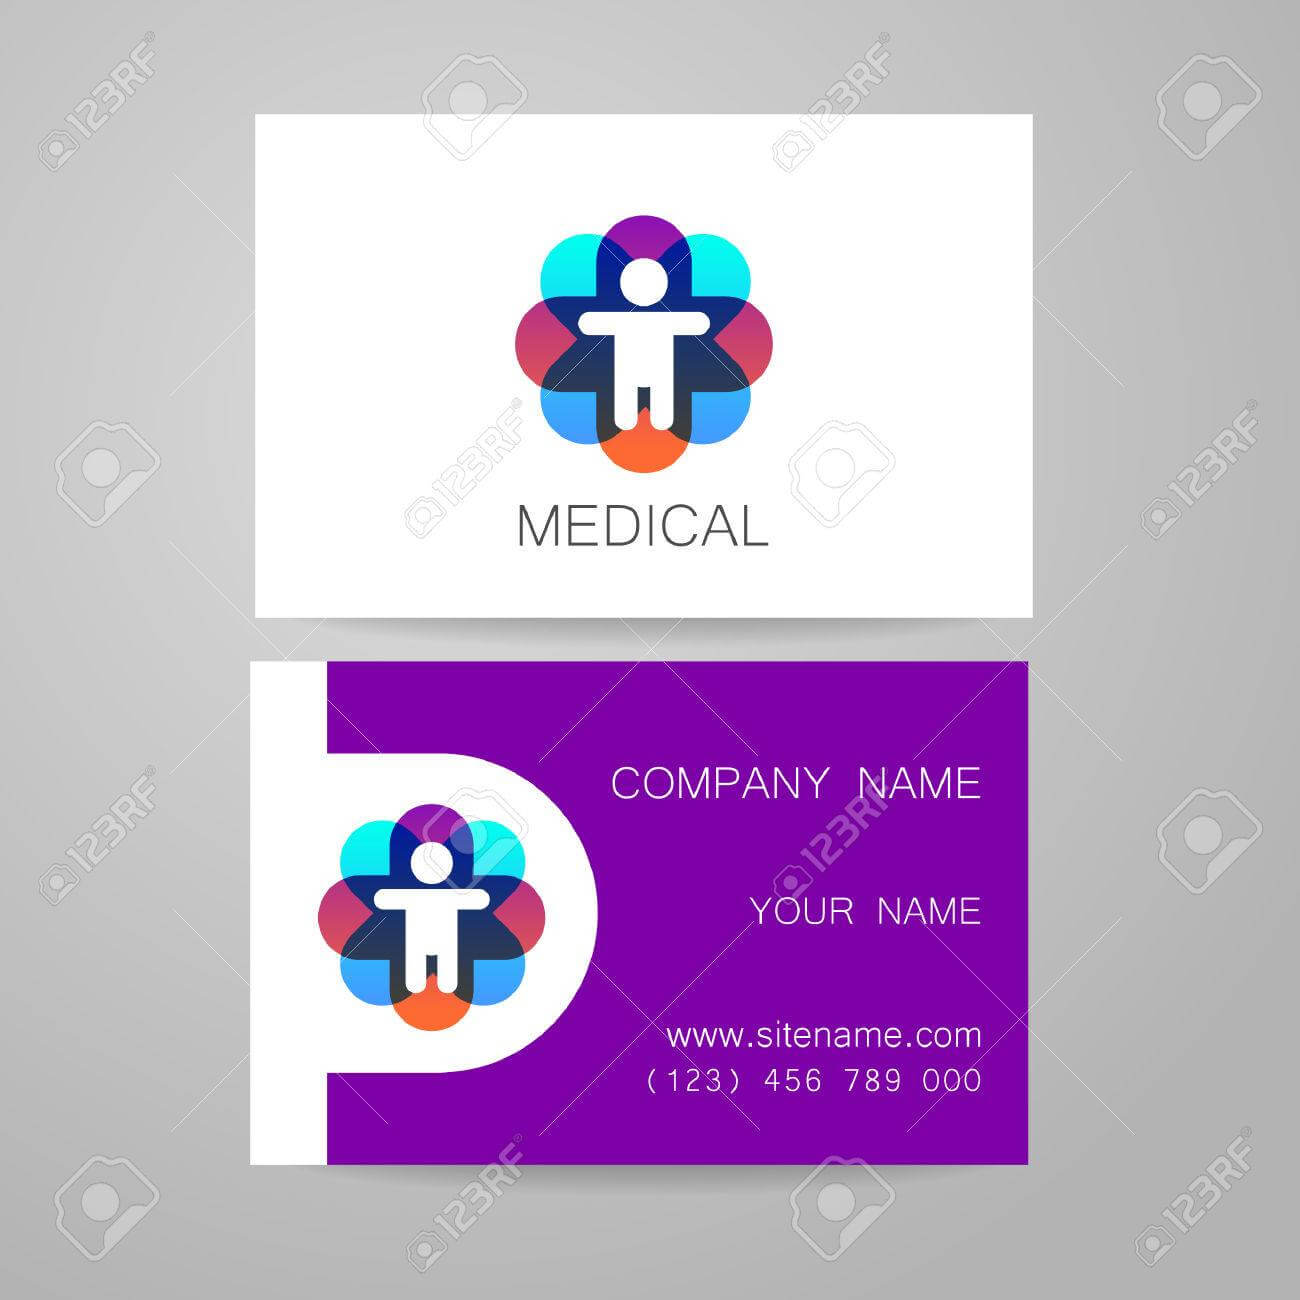 Template Of Medical Business Cards. Regarding Medical Business Cards Templates Free